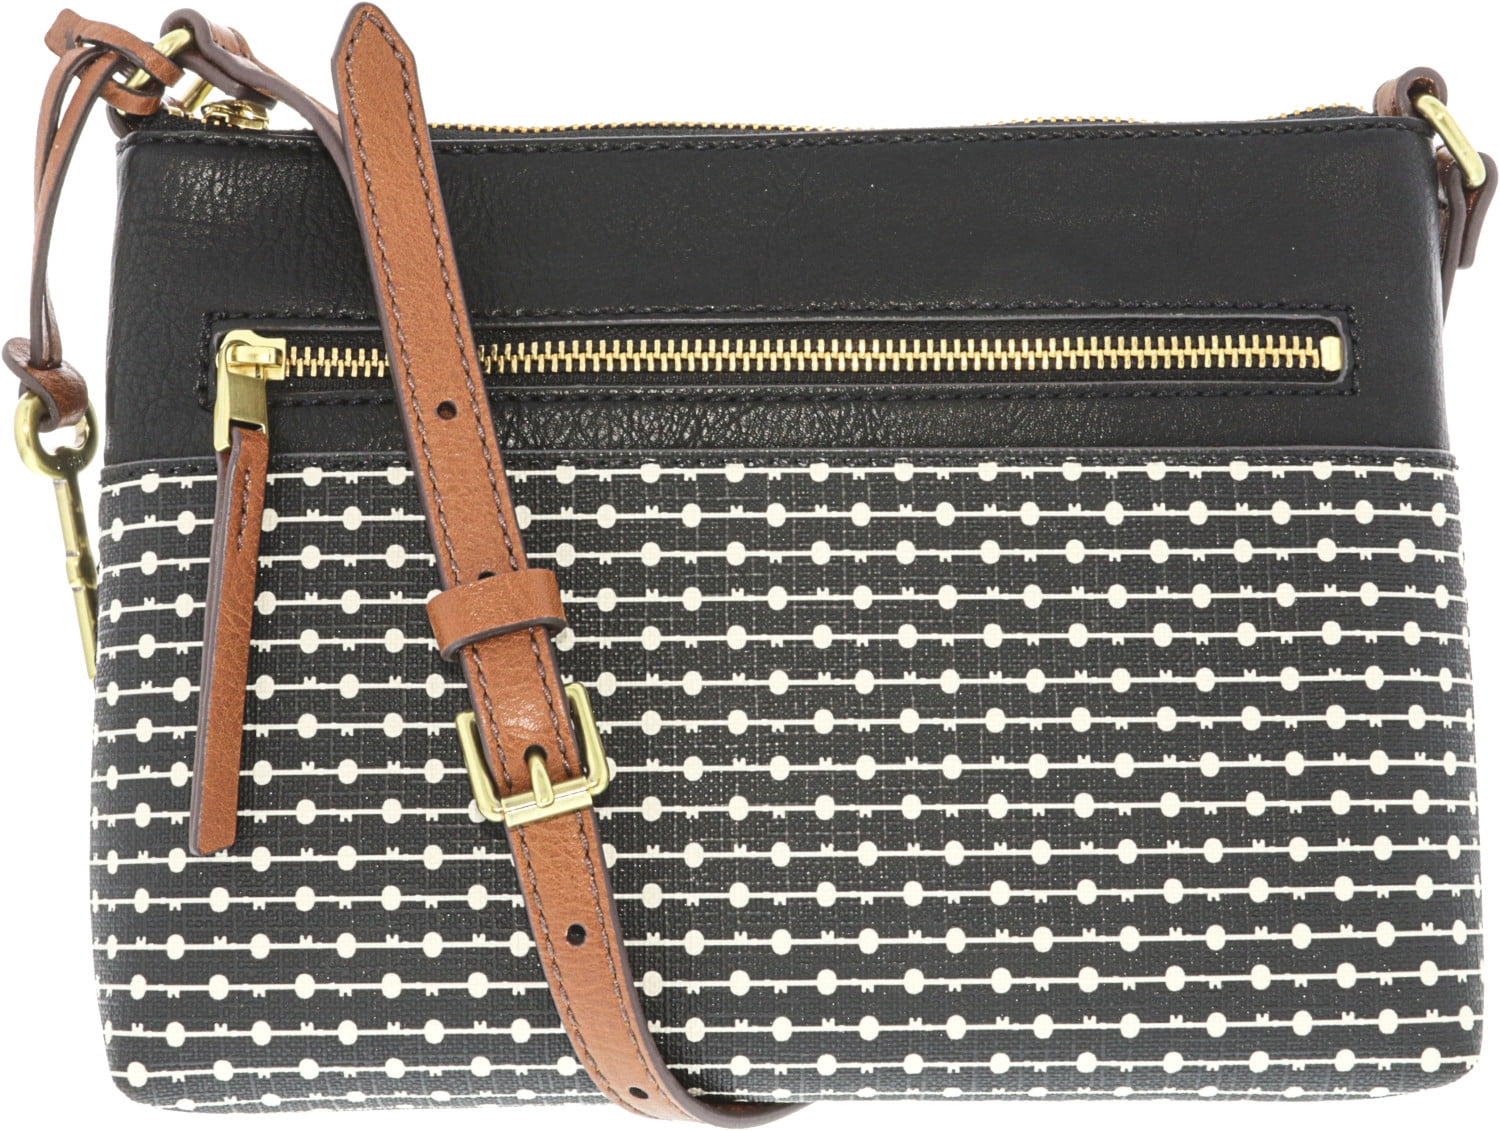 Details about   Fossil Fiona White Cheetah Black Crossbody Bag Women's Handbag B3119 